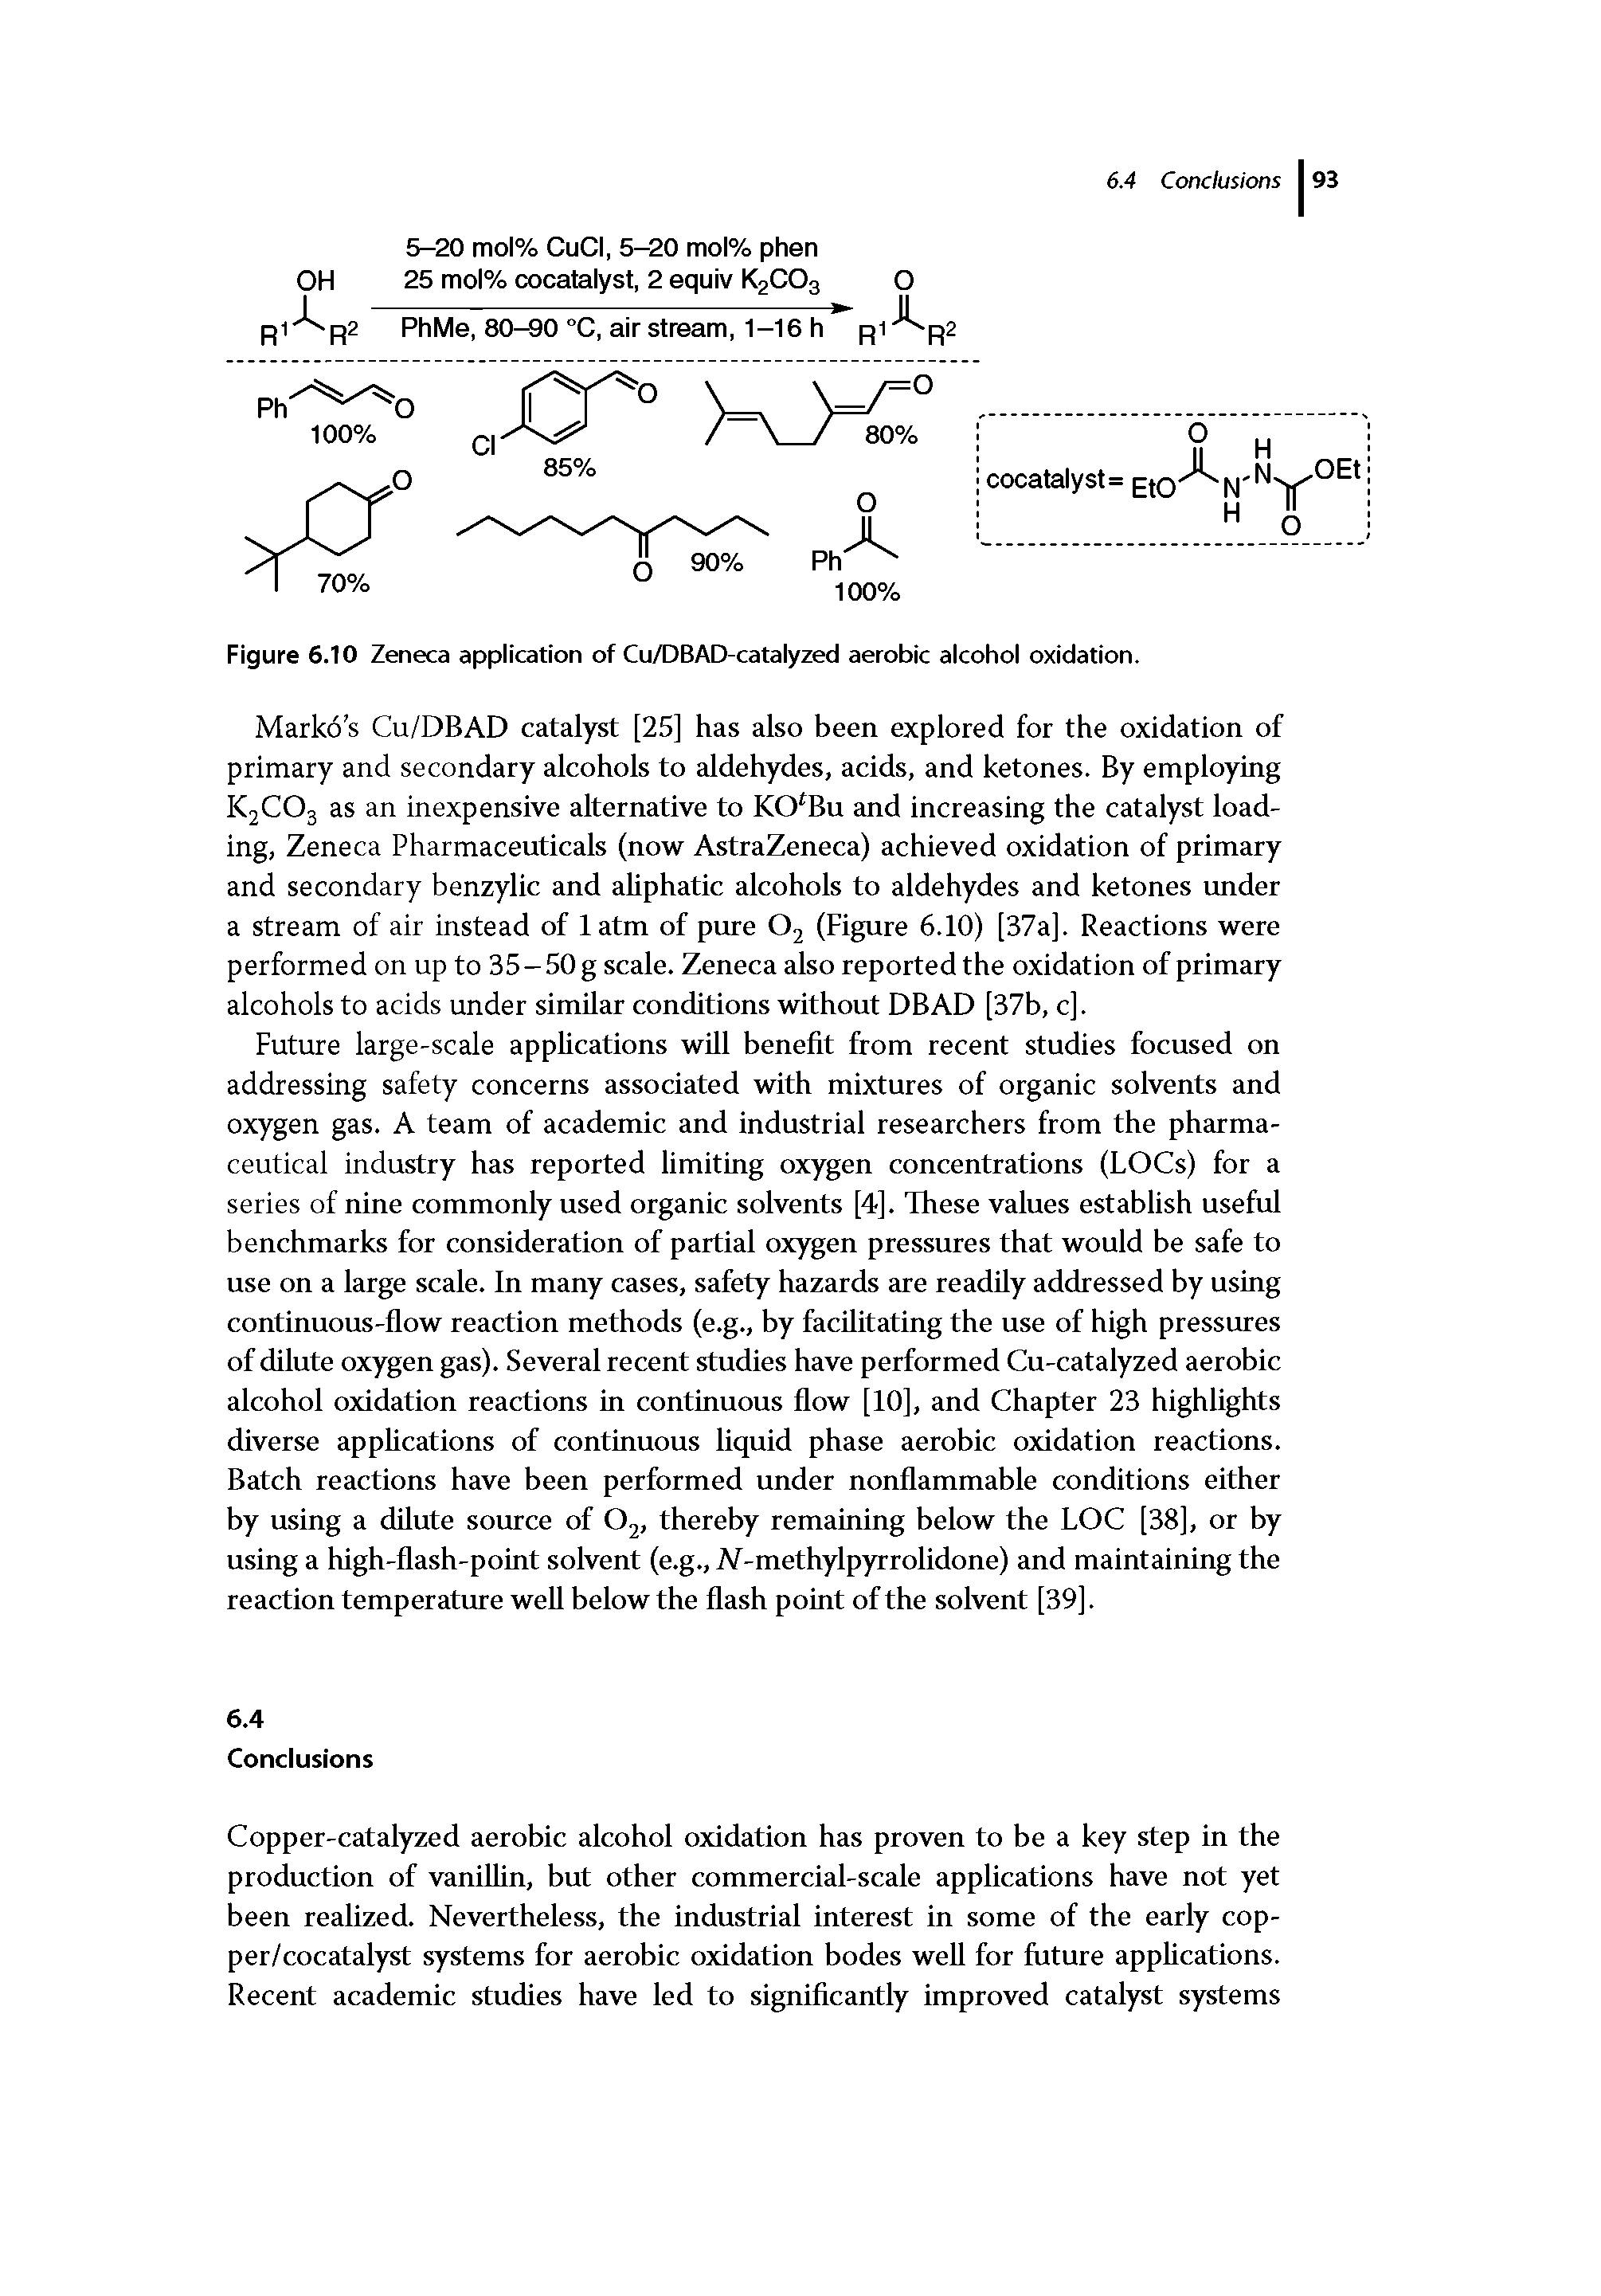 Figure 6.10 Zeneca application of Cu/DBAD-catalyzed aerobic alcohol oxidation.